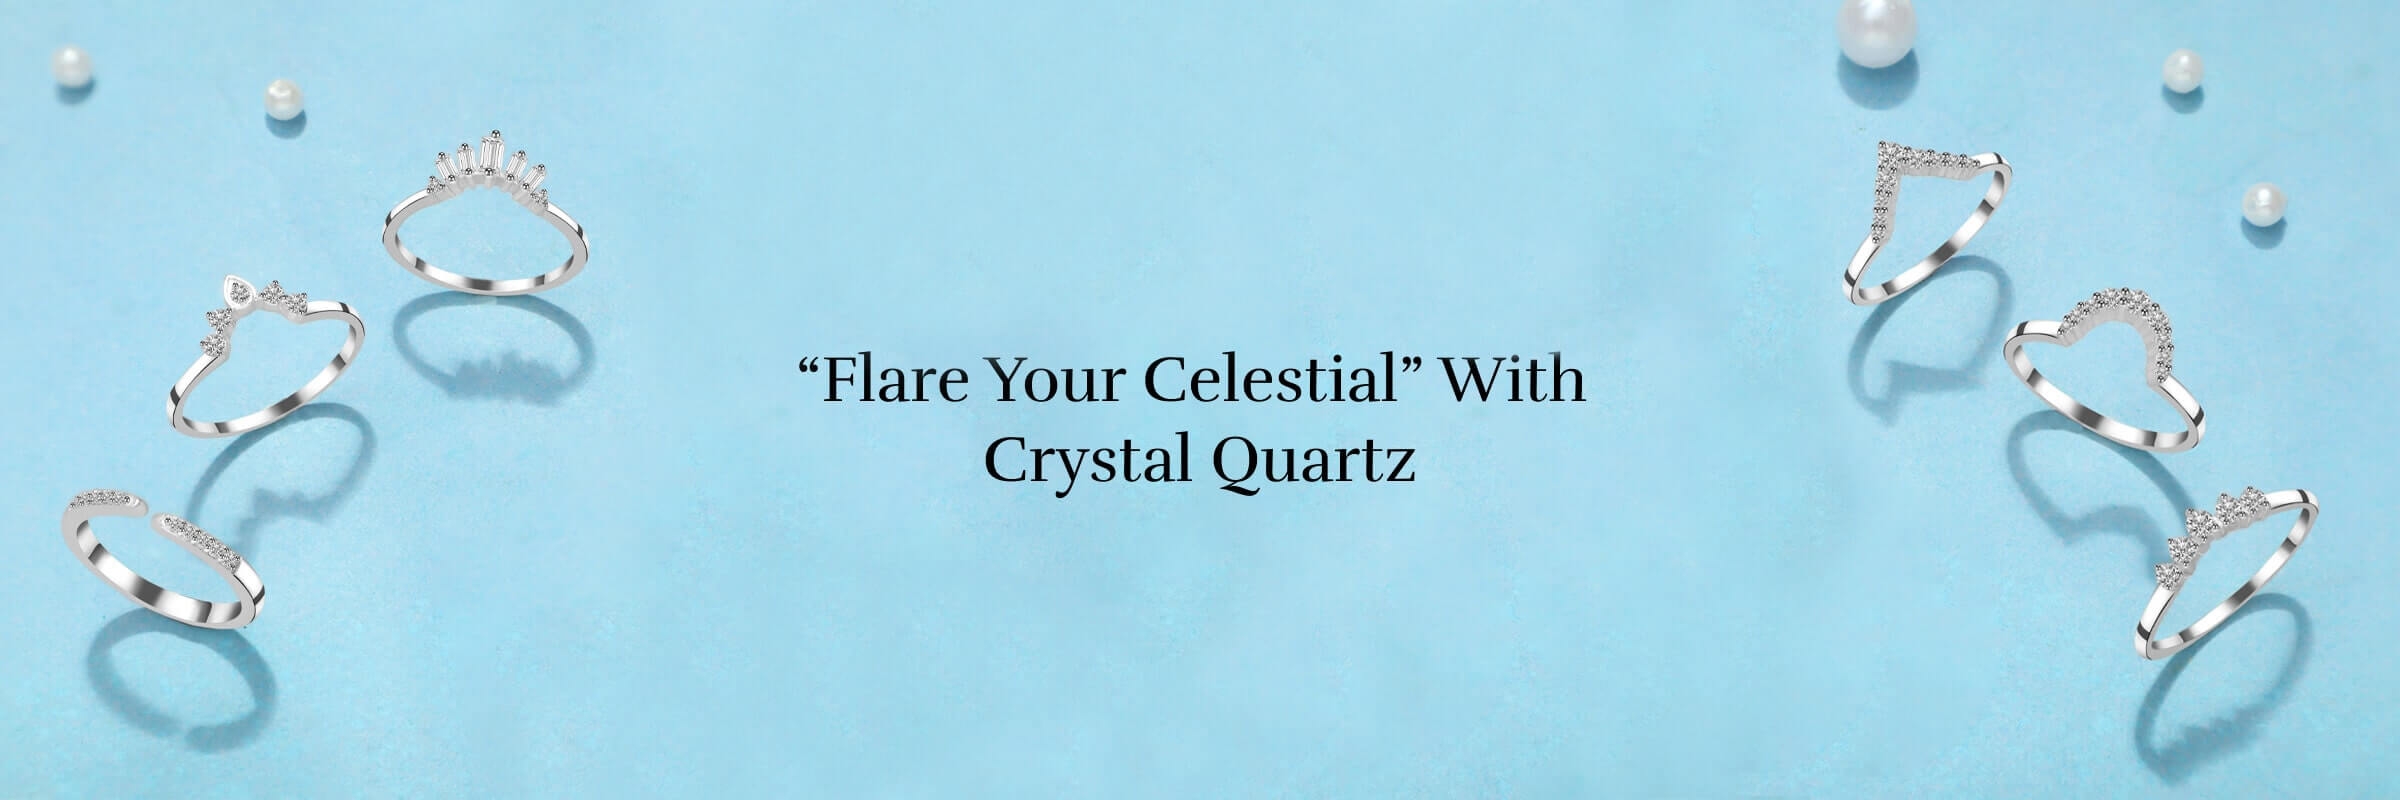 Crystal Quartz Zodiac sign